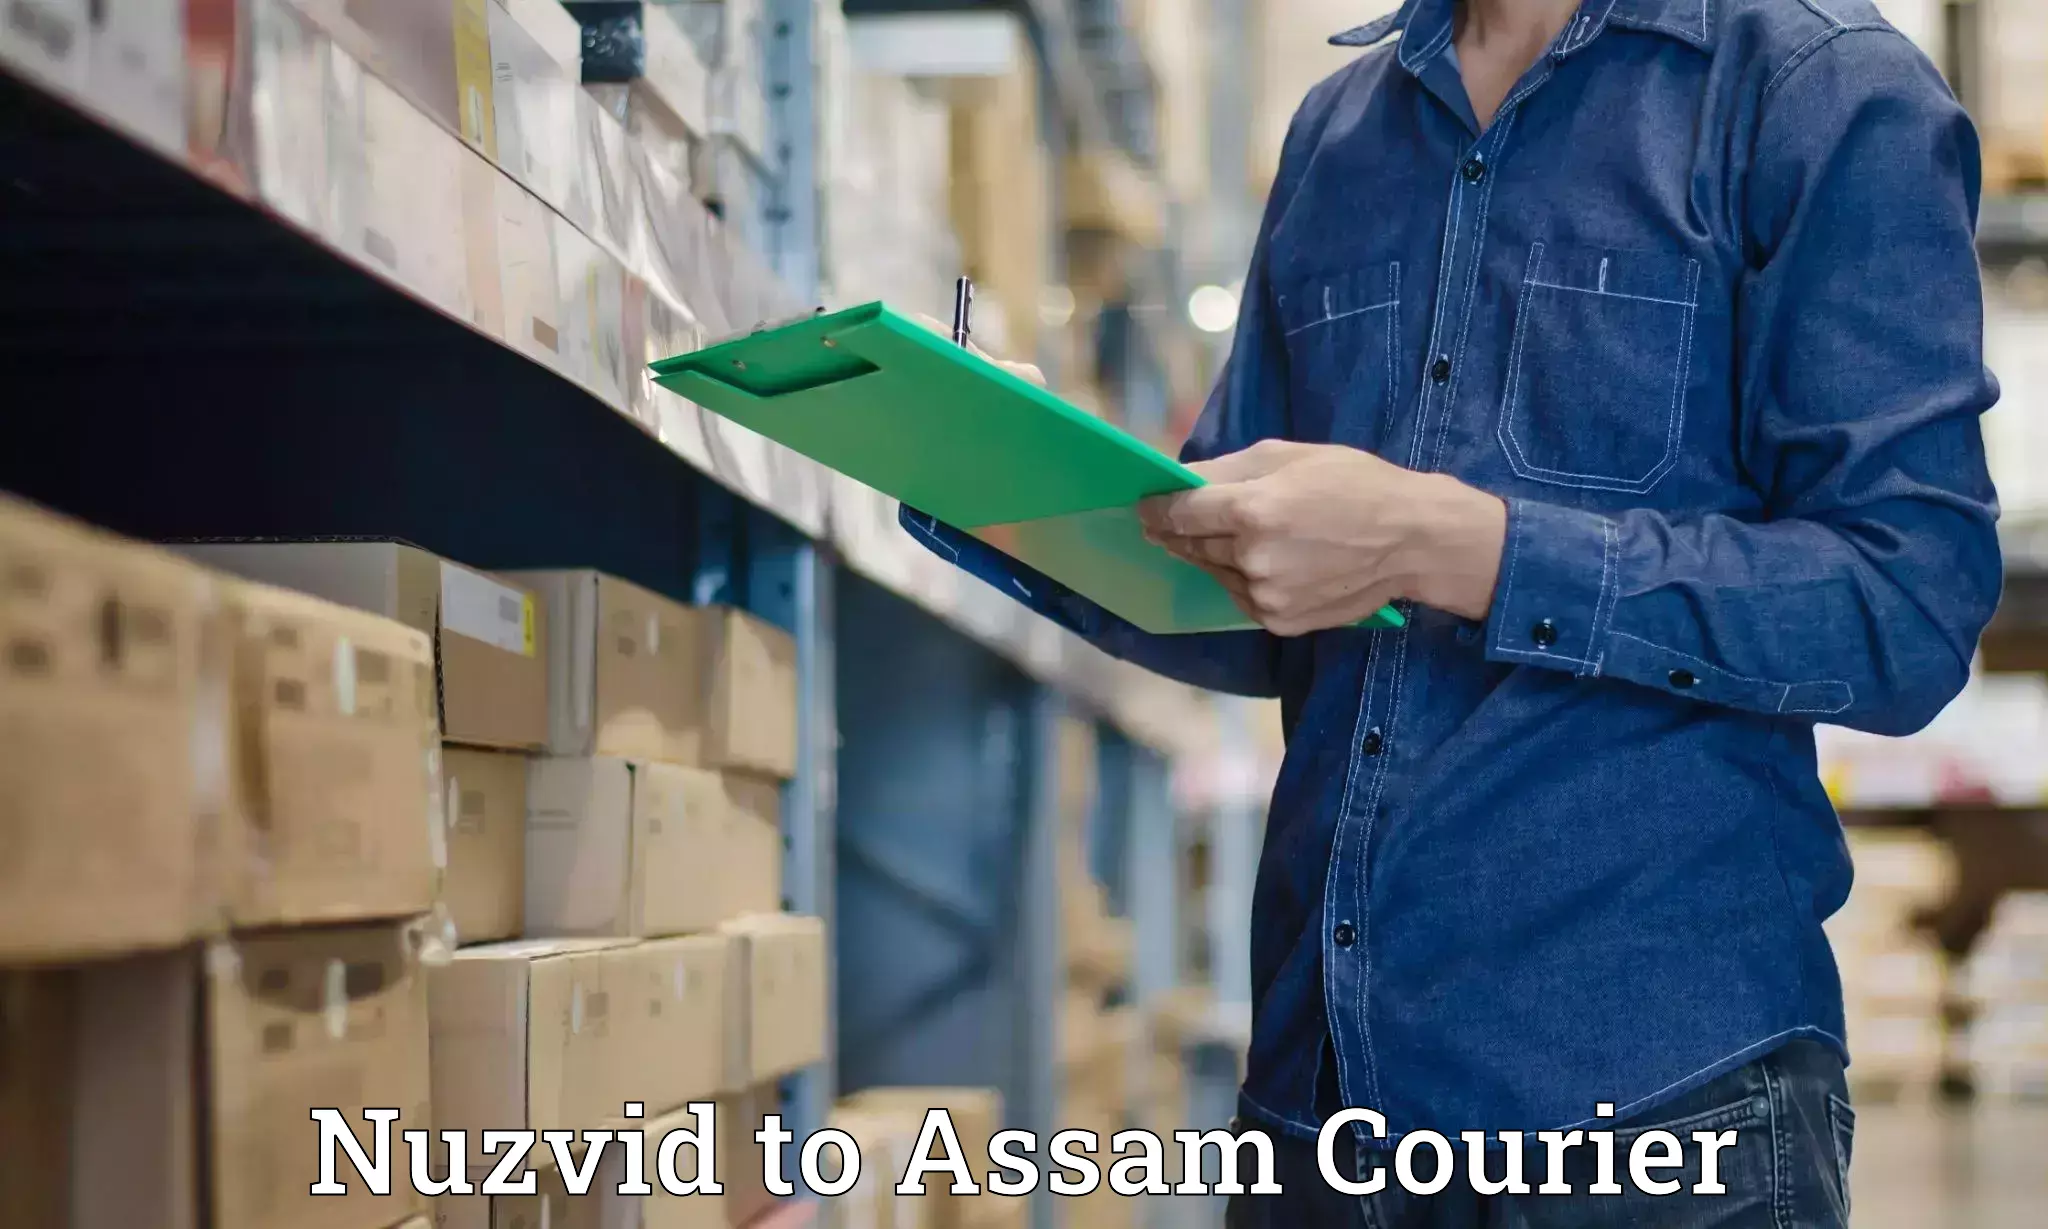 Courier service partnerships Nuzvid to Assam